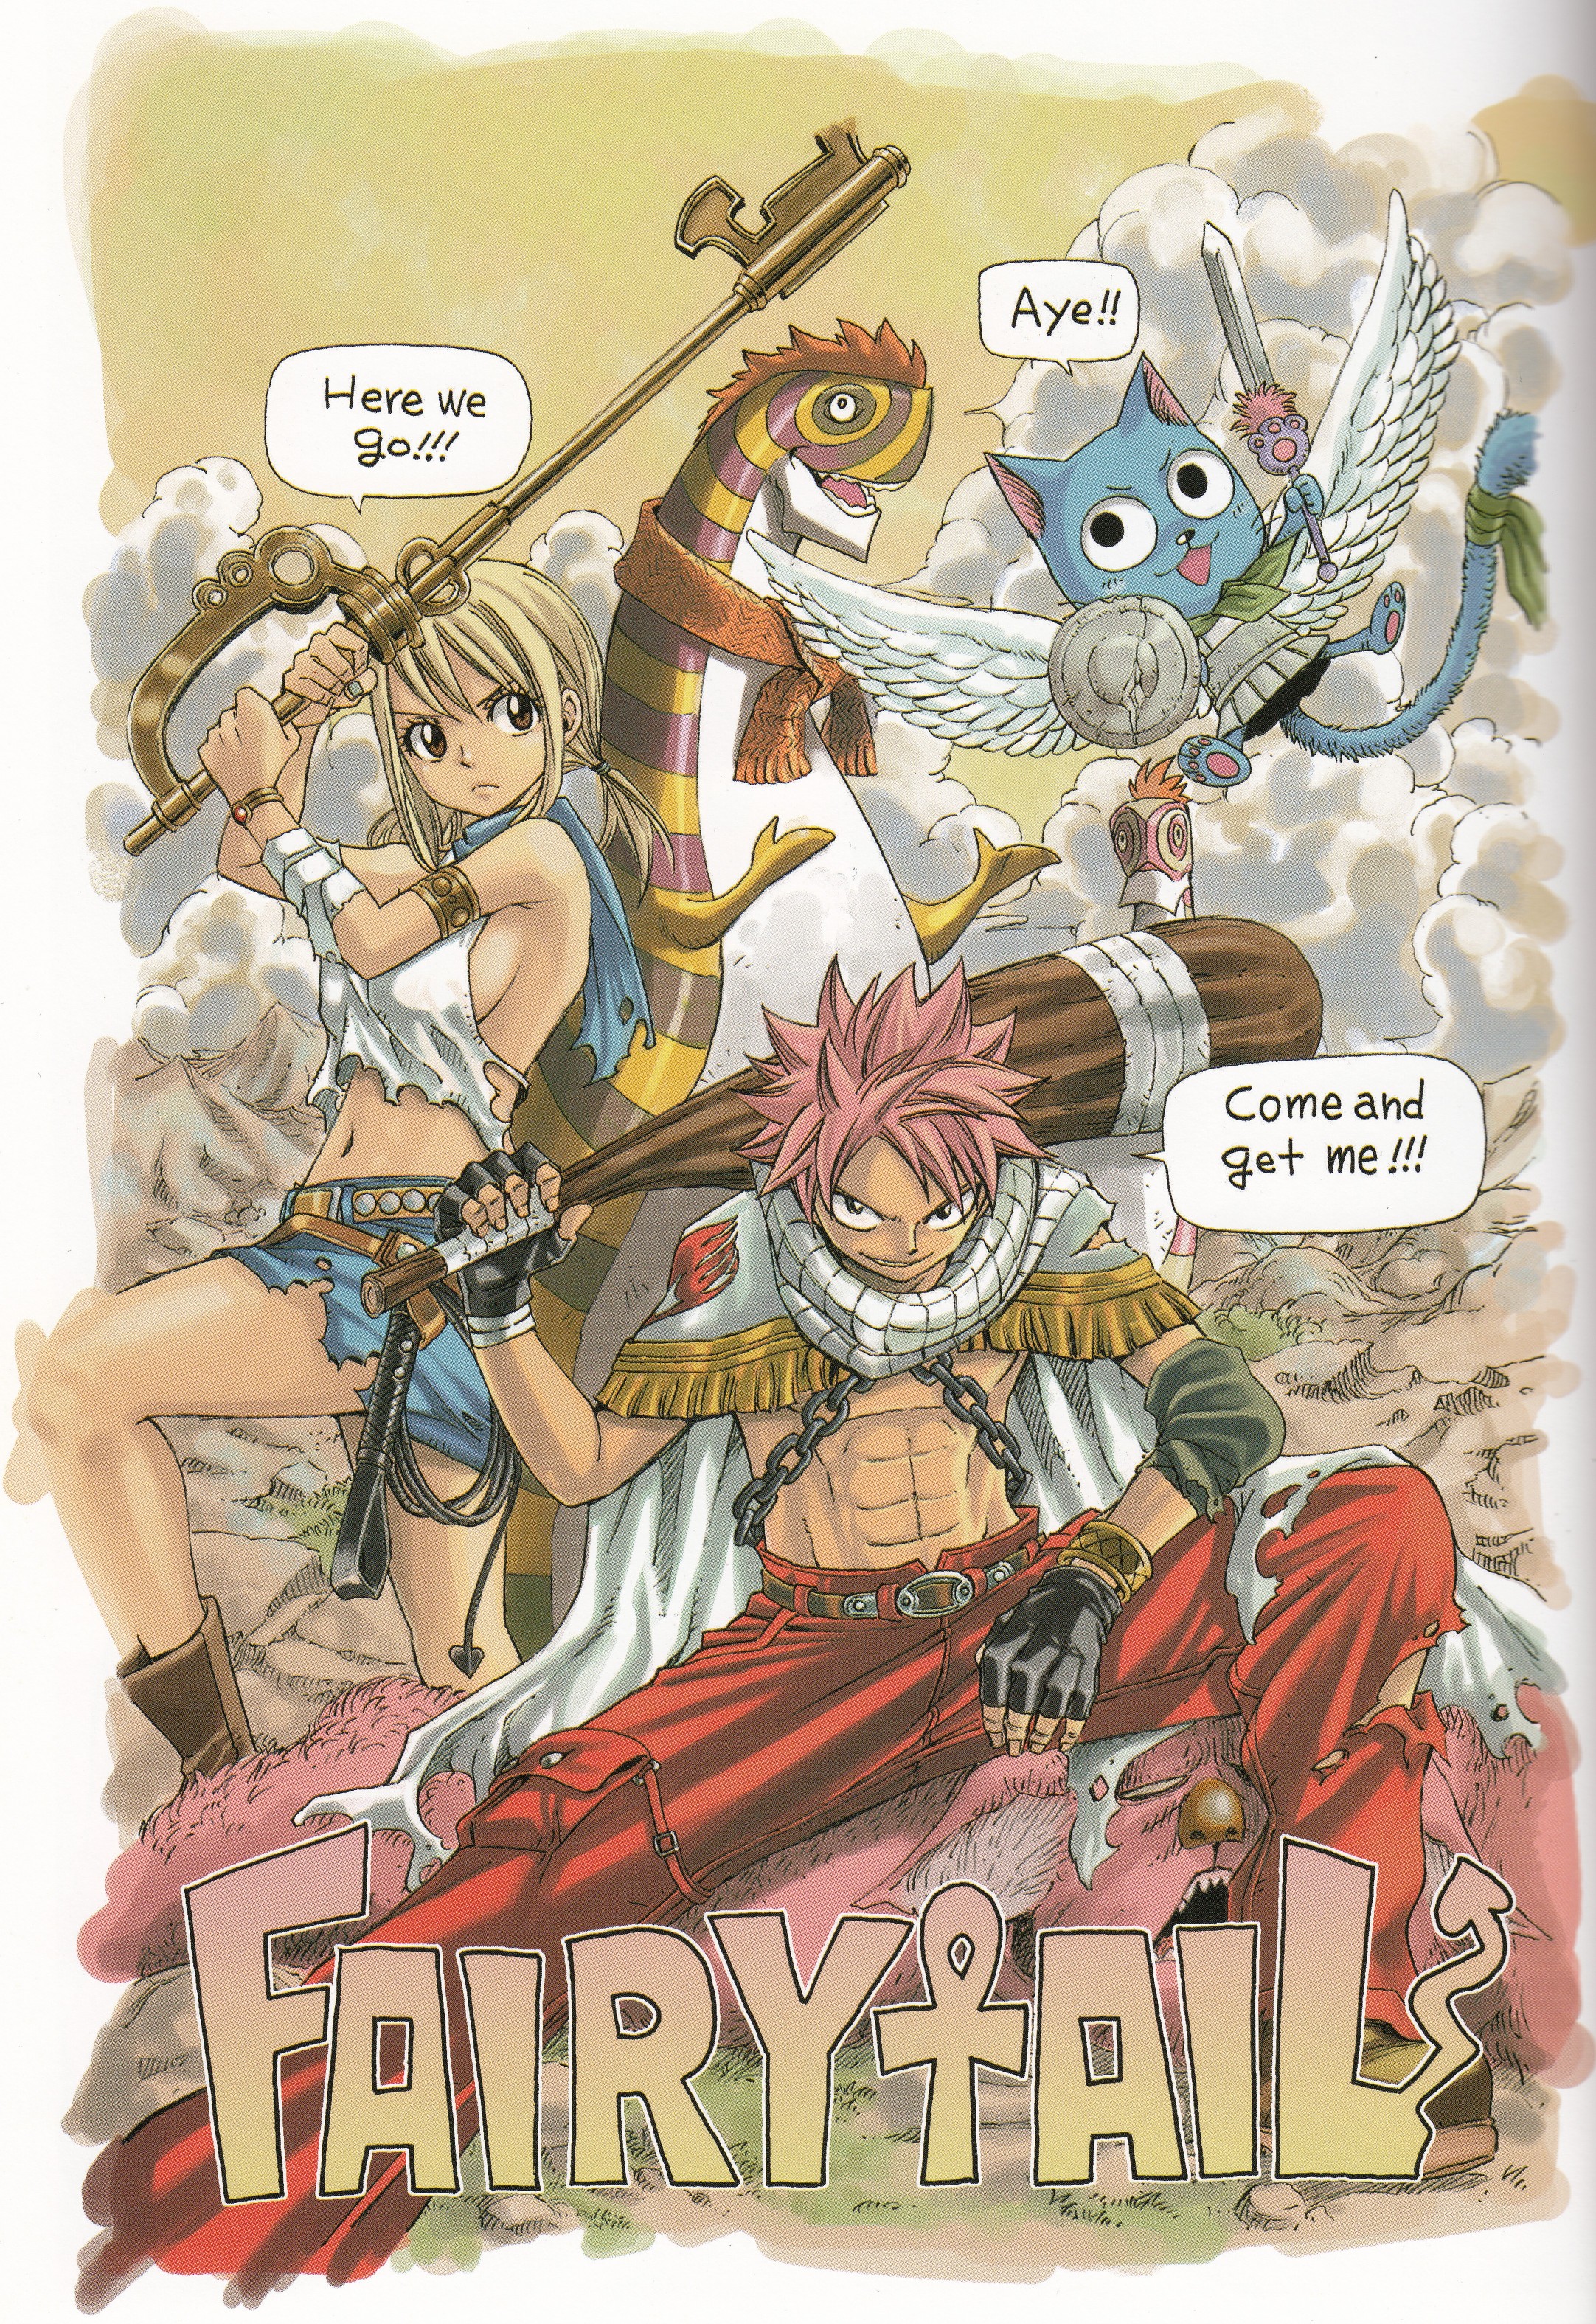 Arbook Fantasia - Fairy Tail Illustrations - p.053.jpg